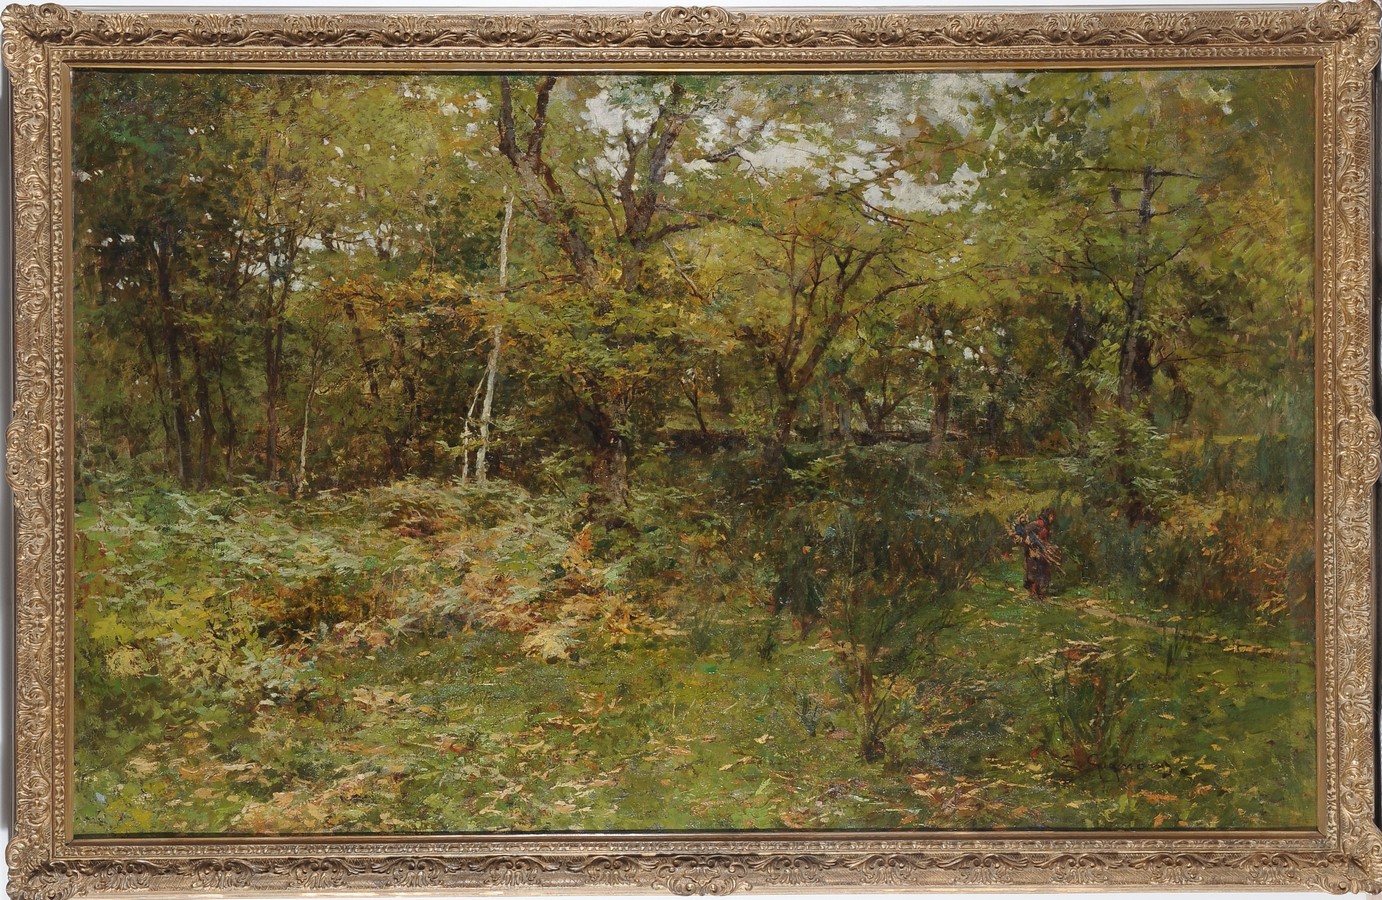 Eugenio Gignous (1850-1906), A legna nel bosco